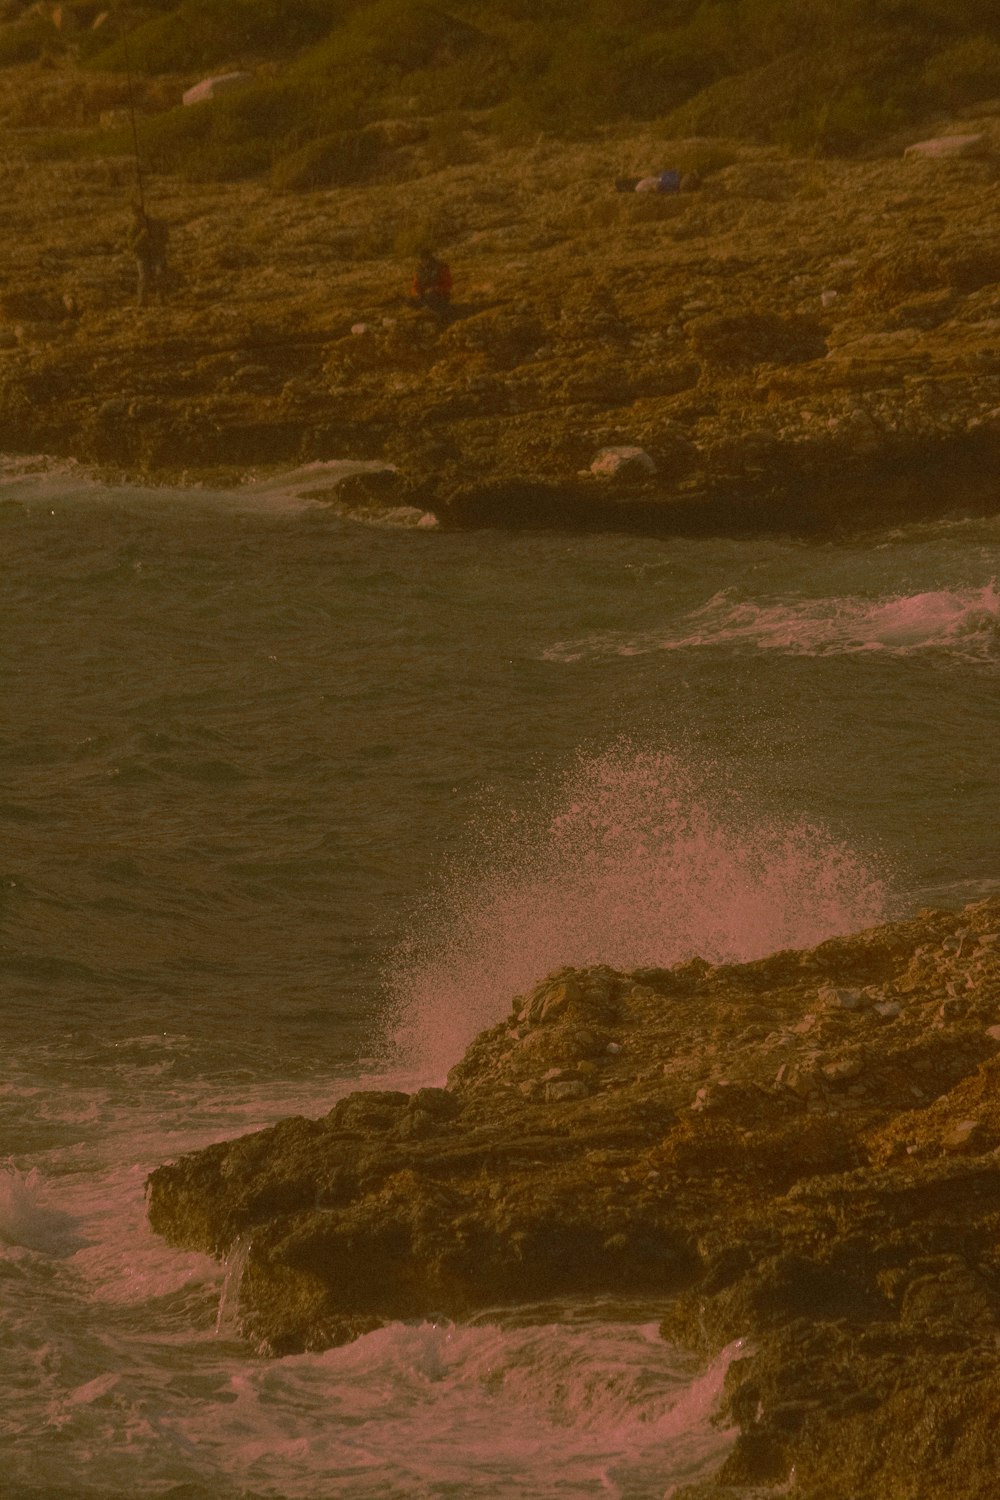 ondas do oceano batendo na costa rochosa durante o dia